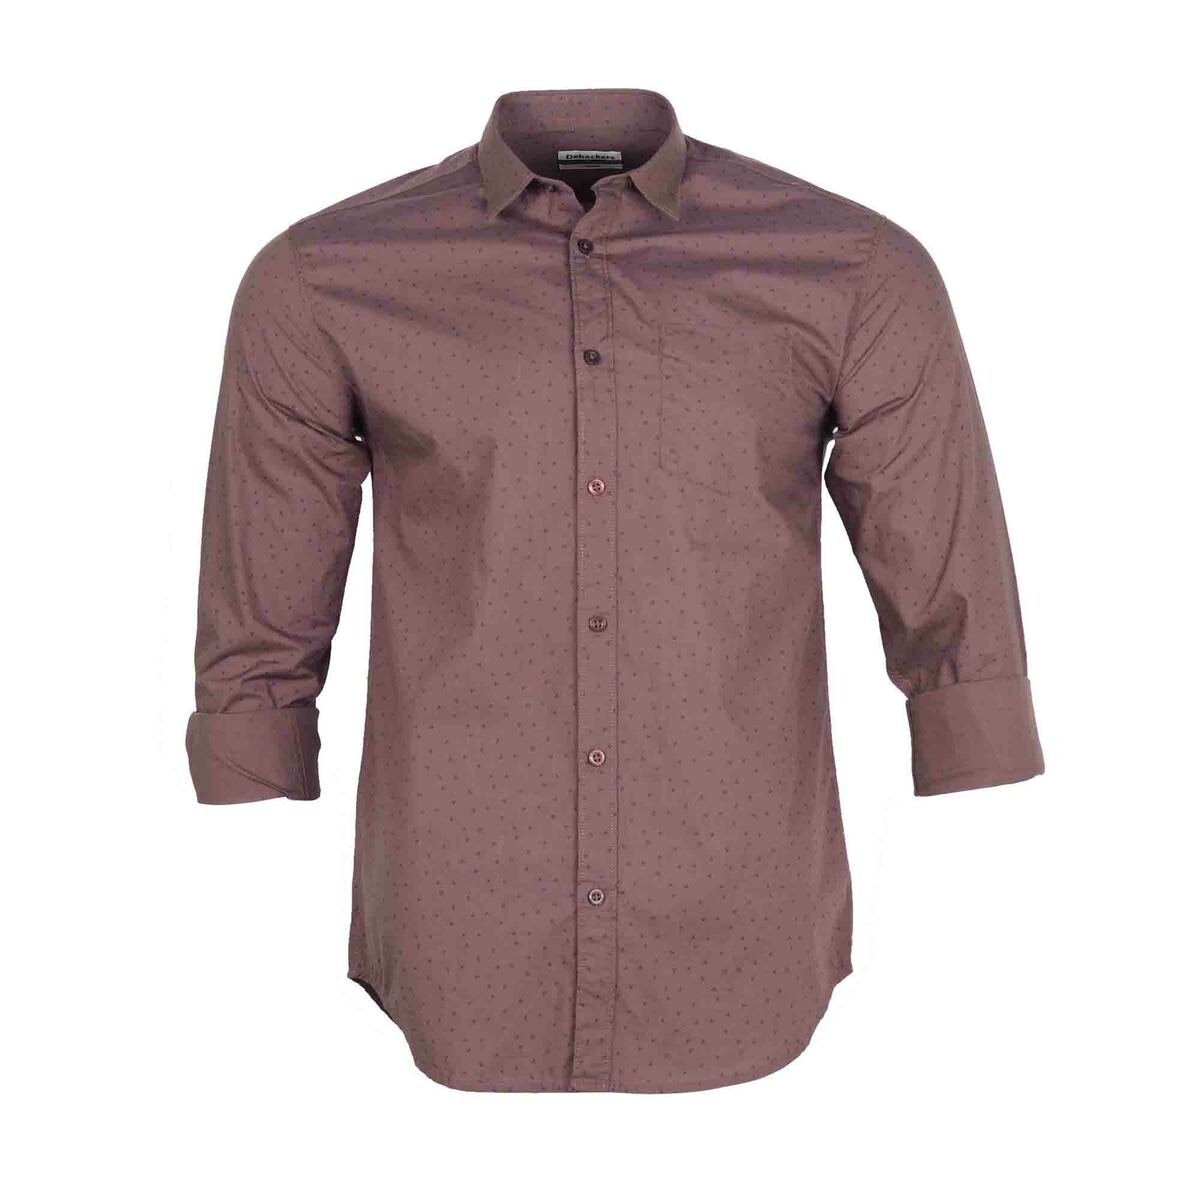 Debackers Men's Casual Shirt Long Sleeve Brown Small